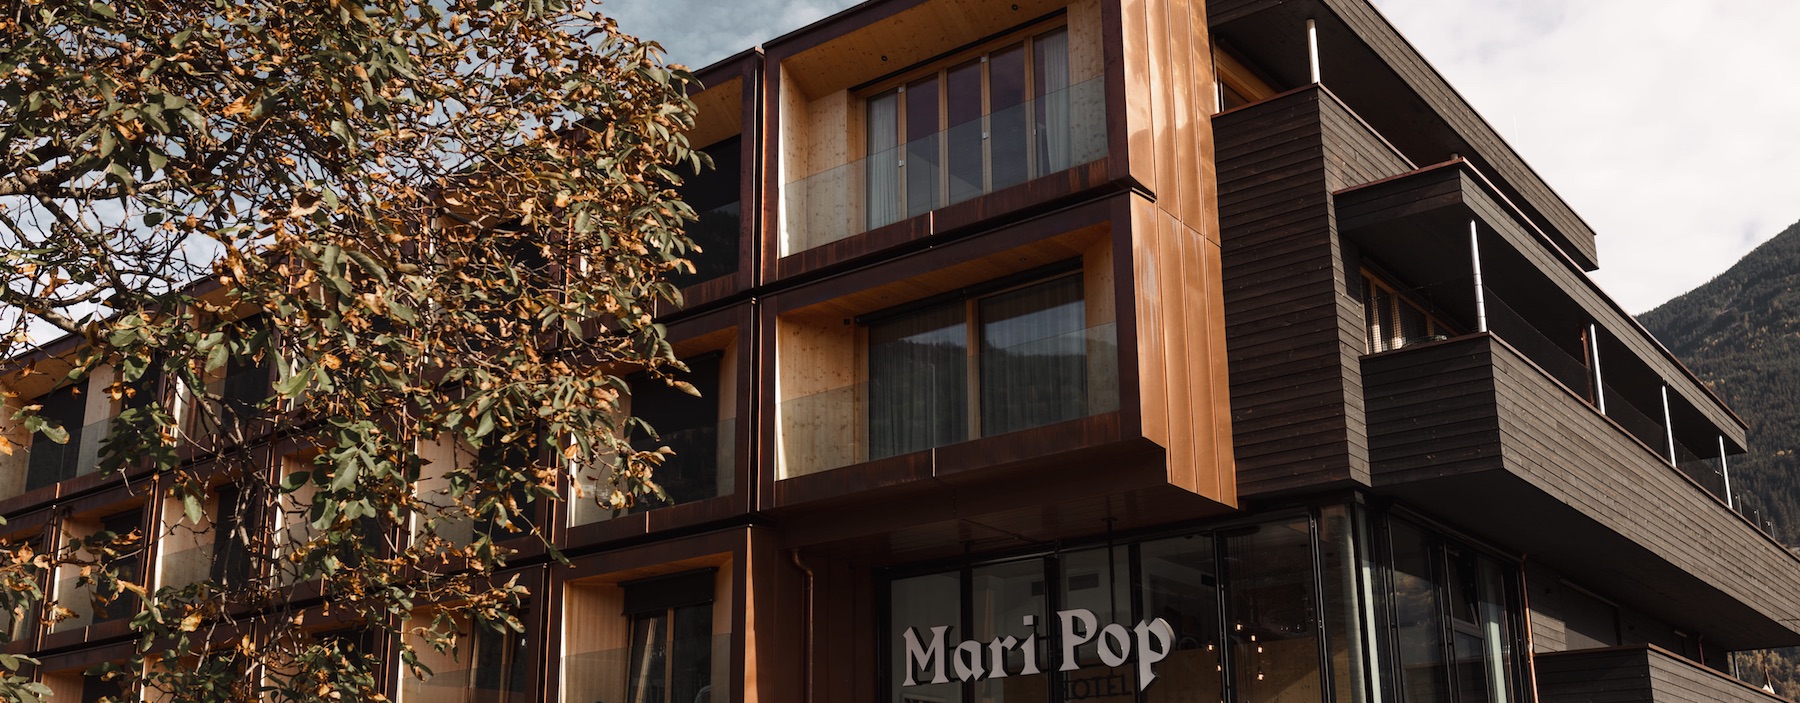 Hotel Mari Pop, Foto (c) Hotel Mari Pop